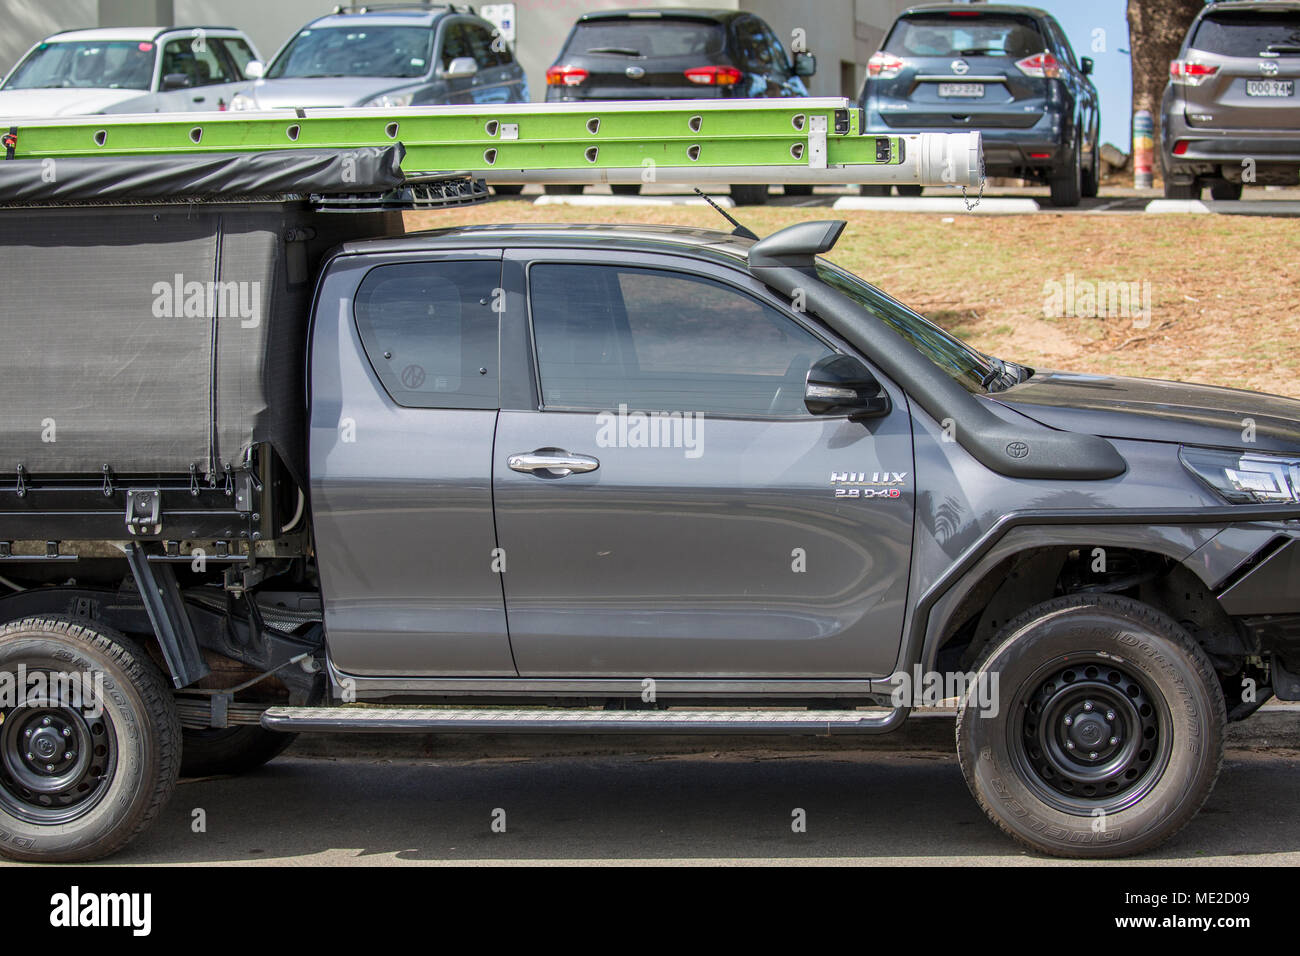 Toyota Hilux ute utility vehicle in Sydney,Australia Stock Photo